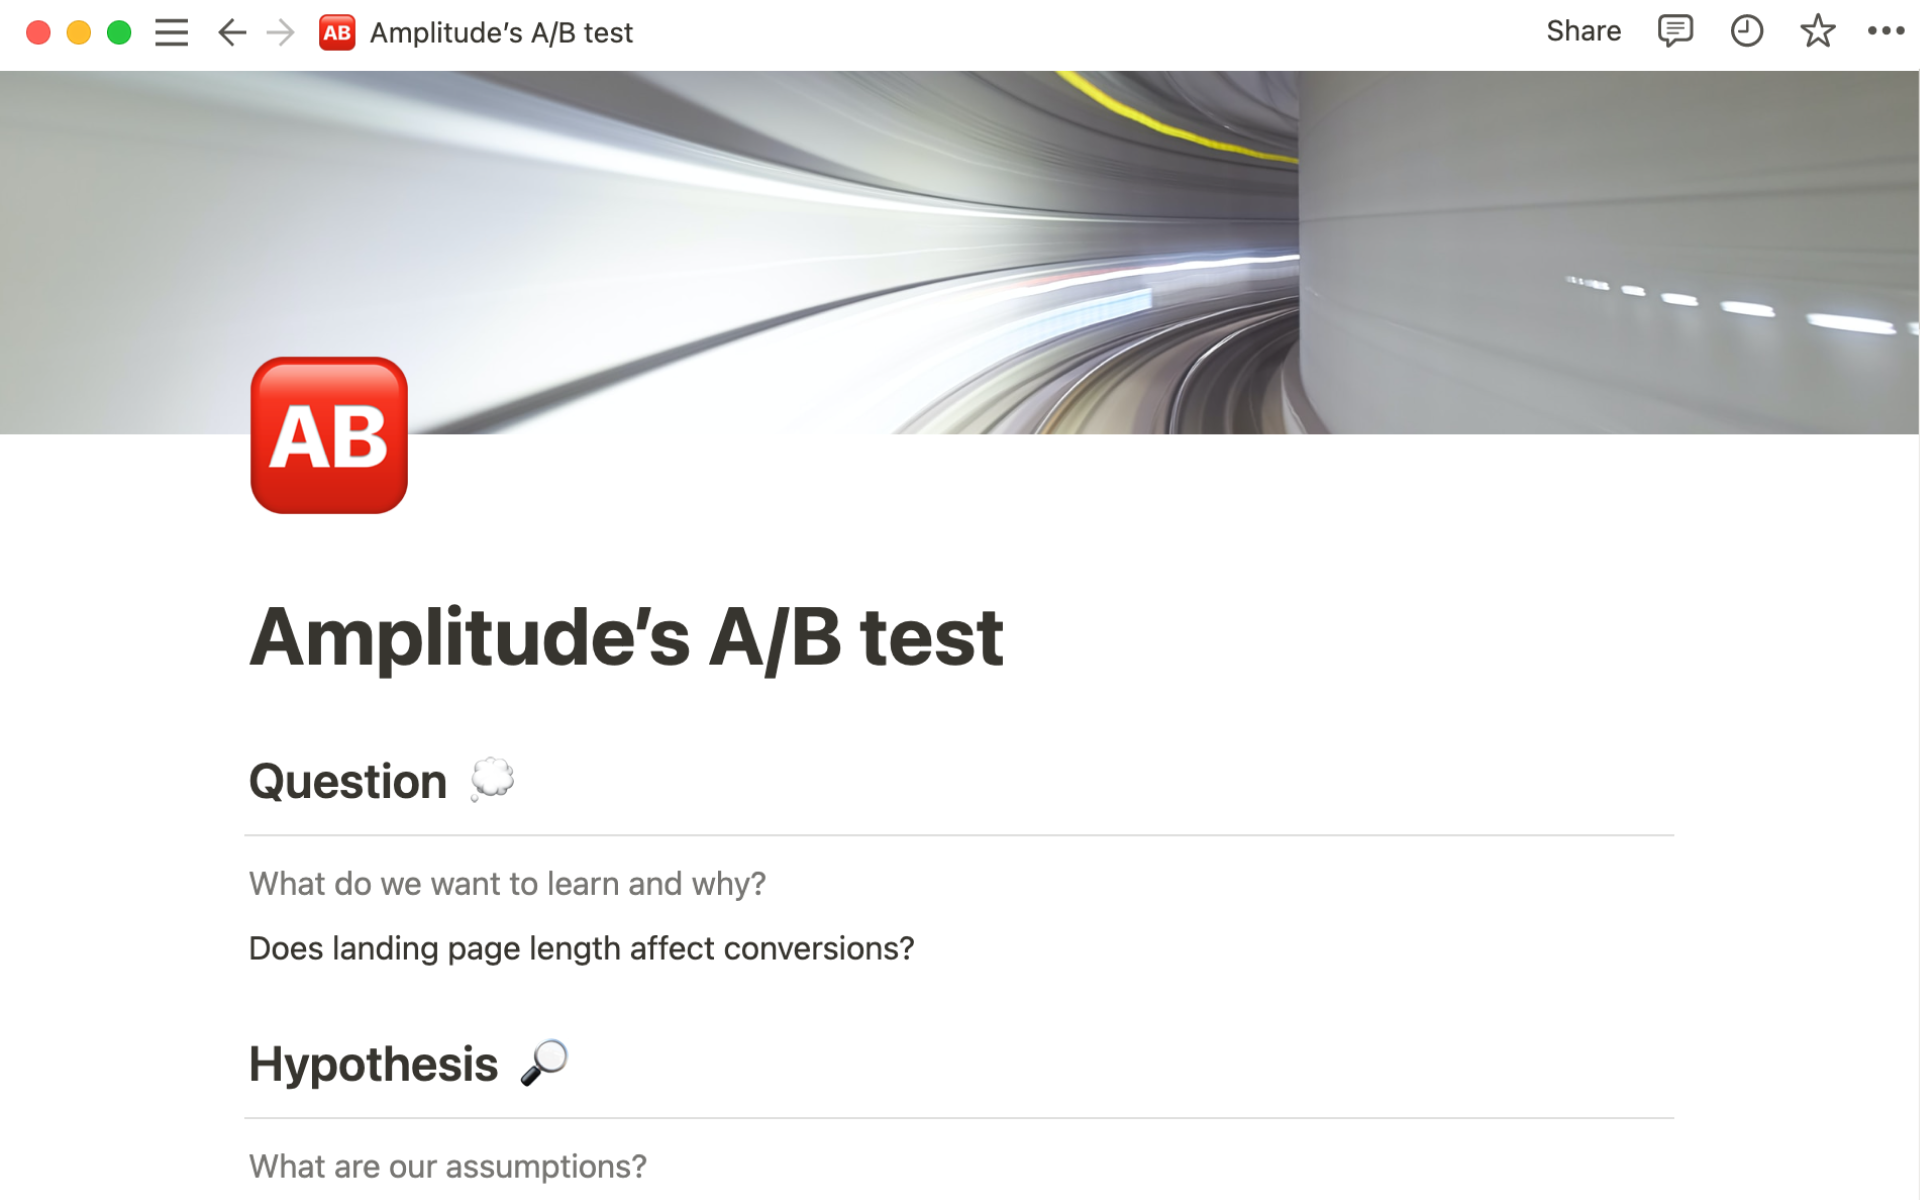 Context driven A/B test that uses Amplitude integrations.